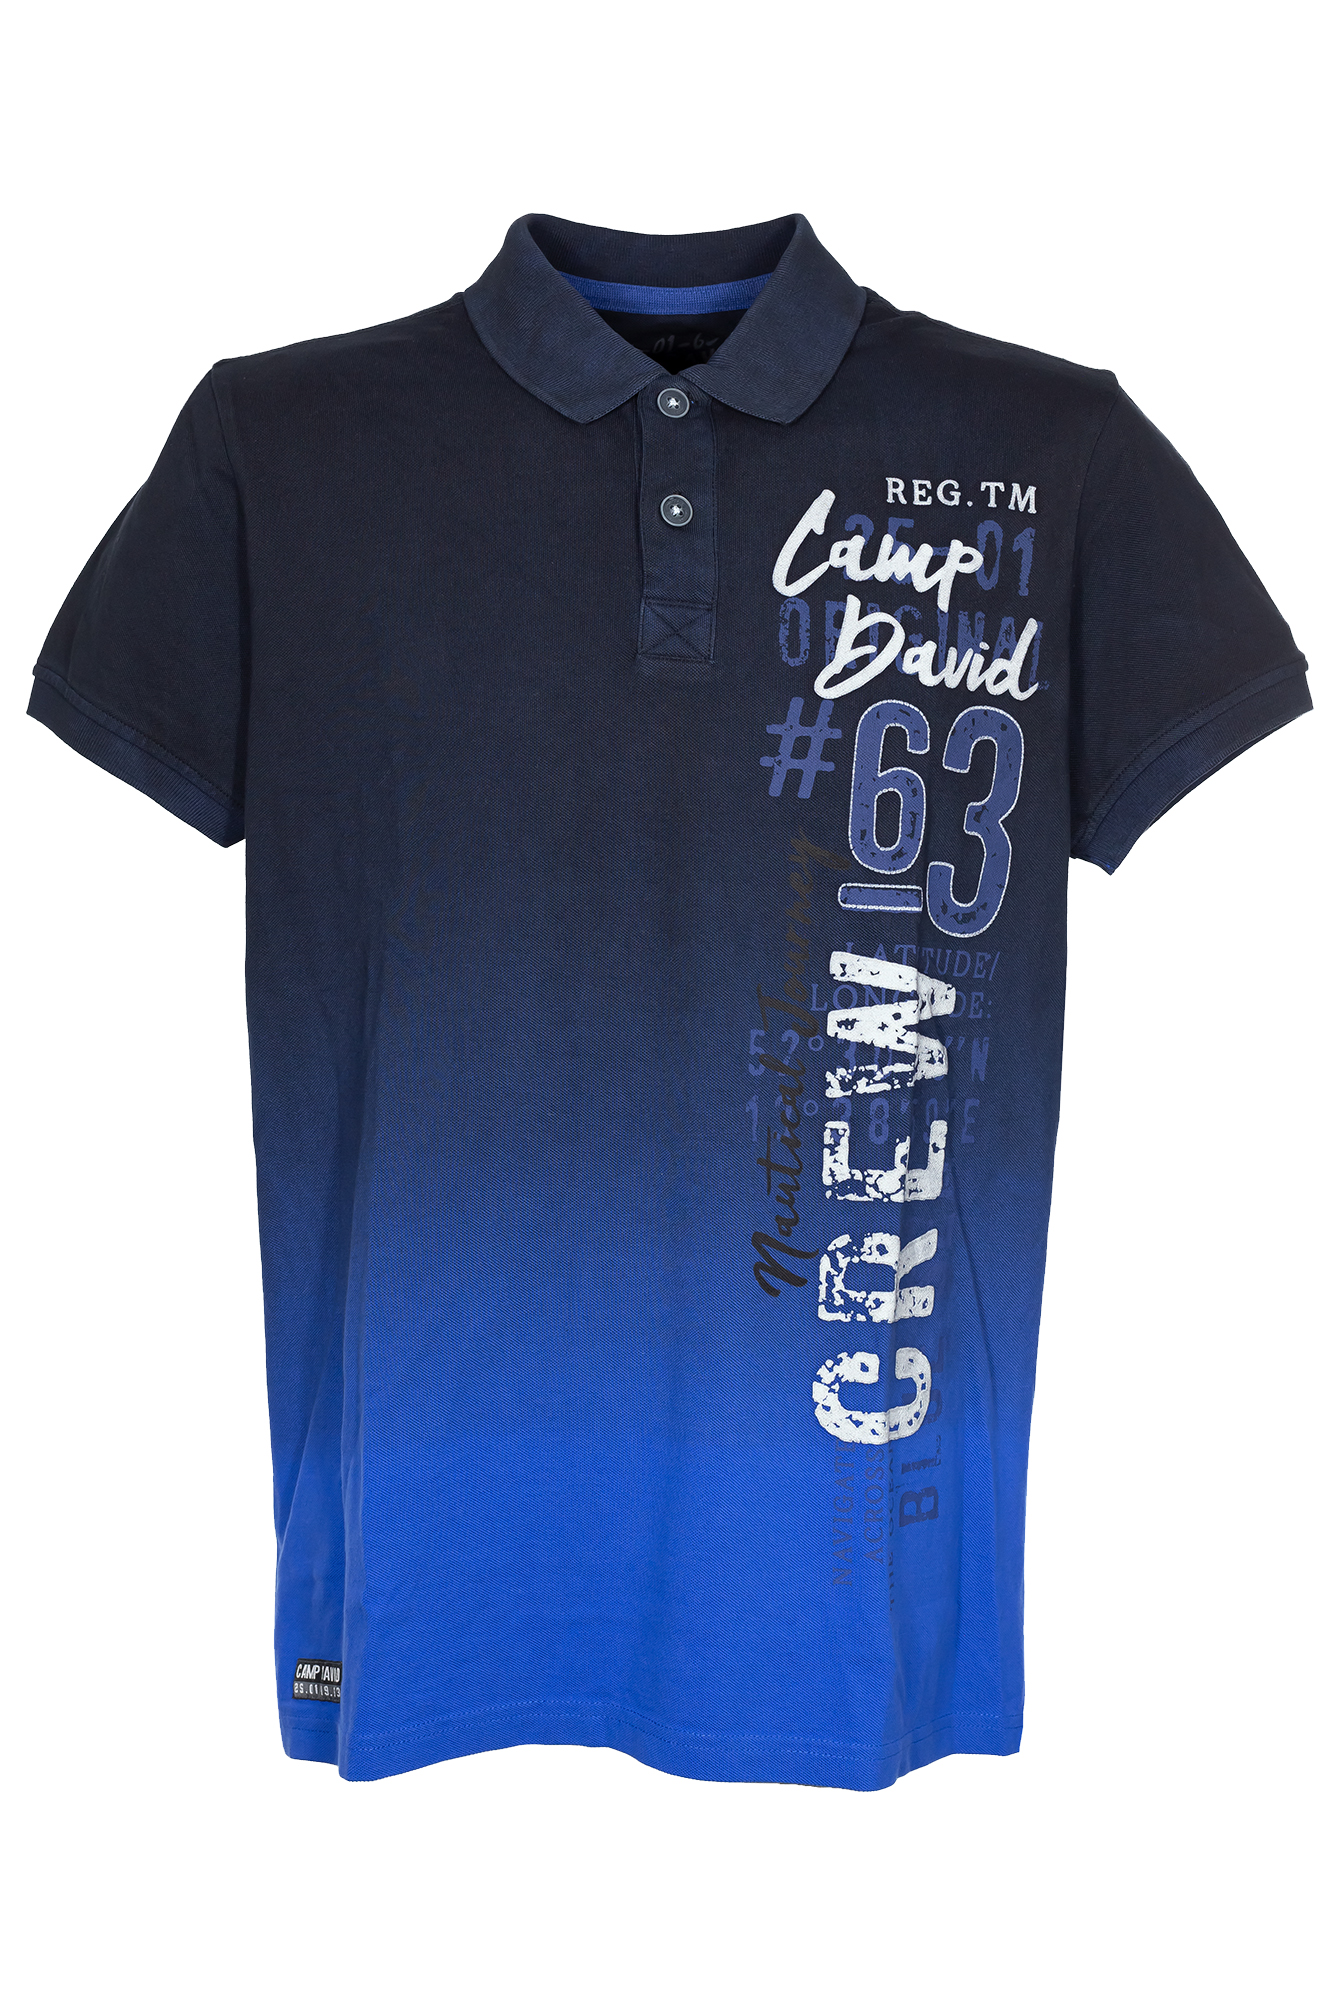 Camp David | Jersey Blau Poloshirt eBay Polo Herren Orange Baumwolle Kurzarm Hemd